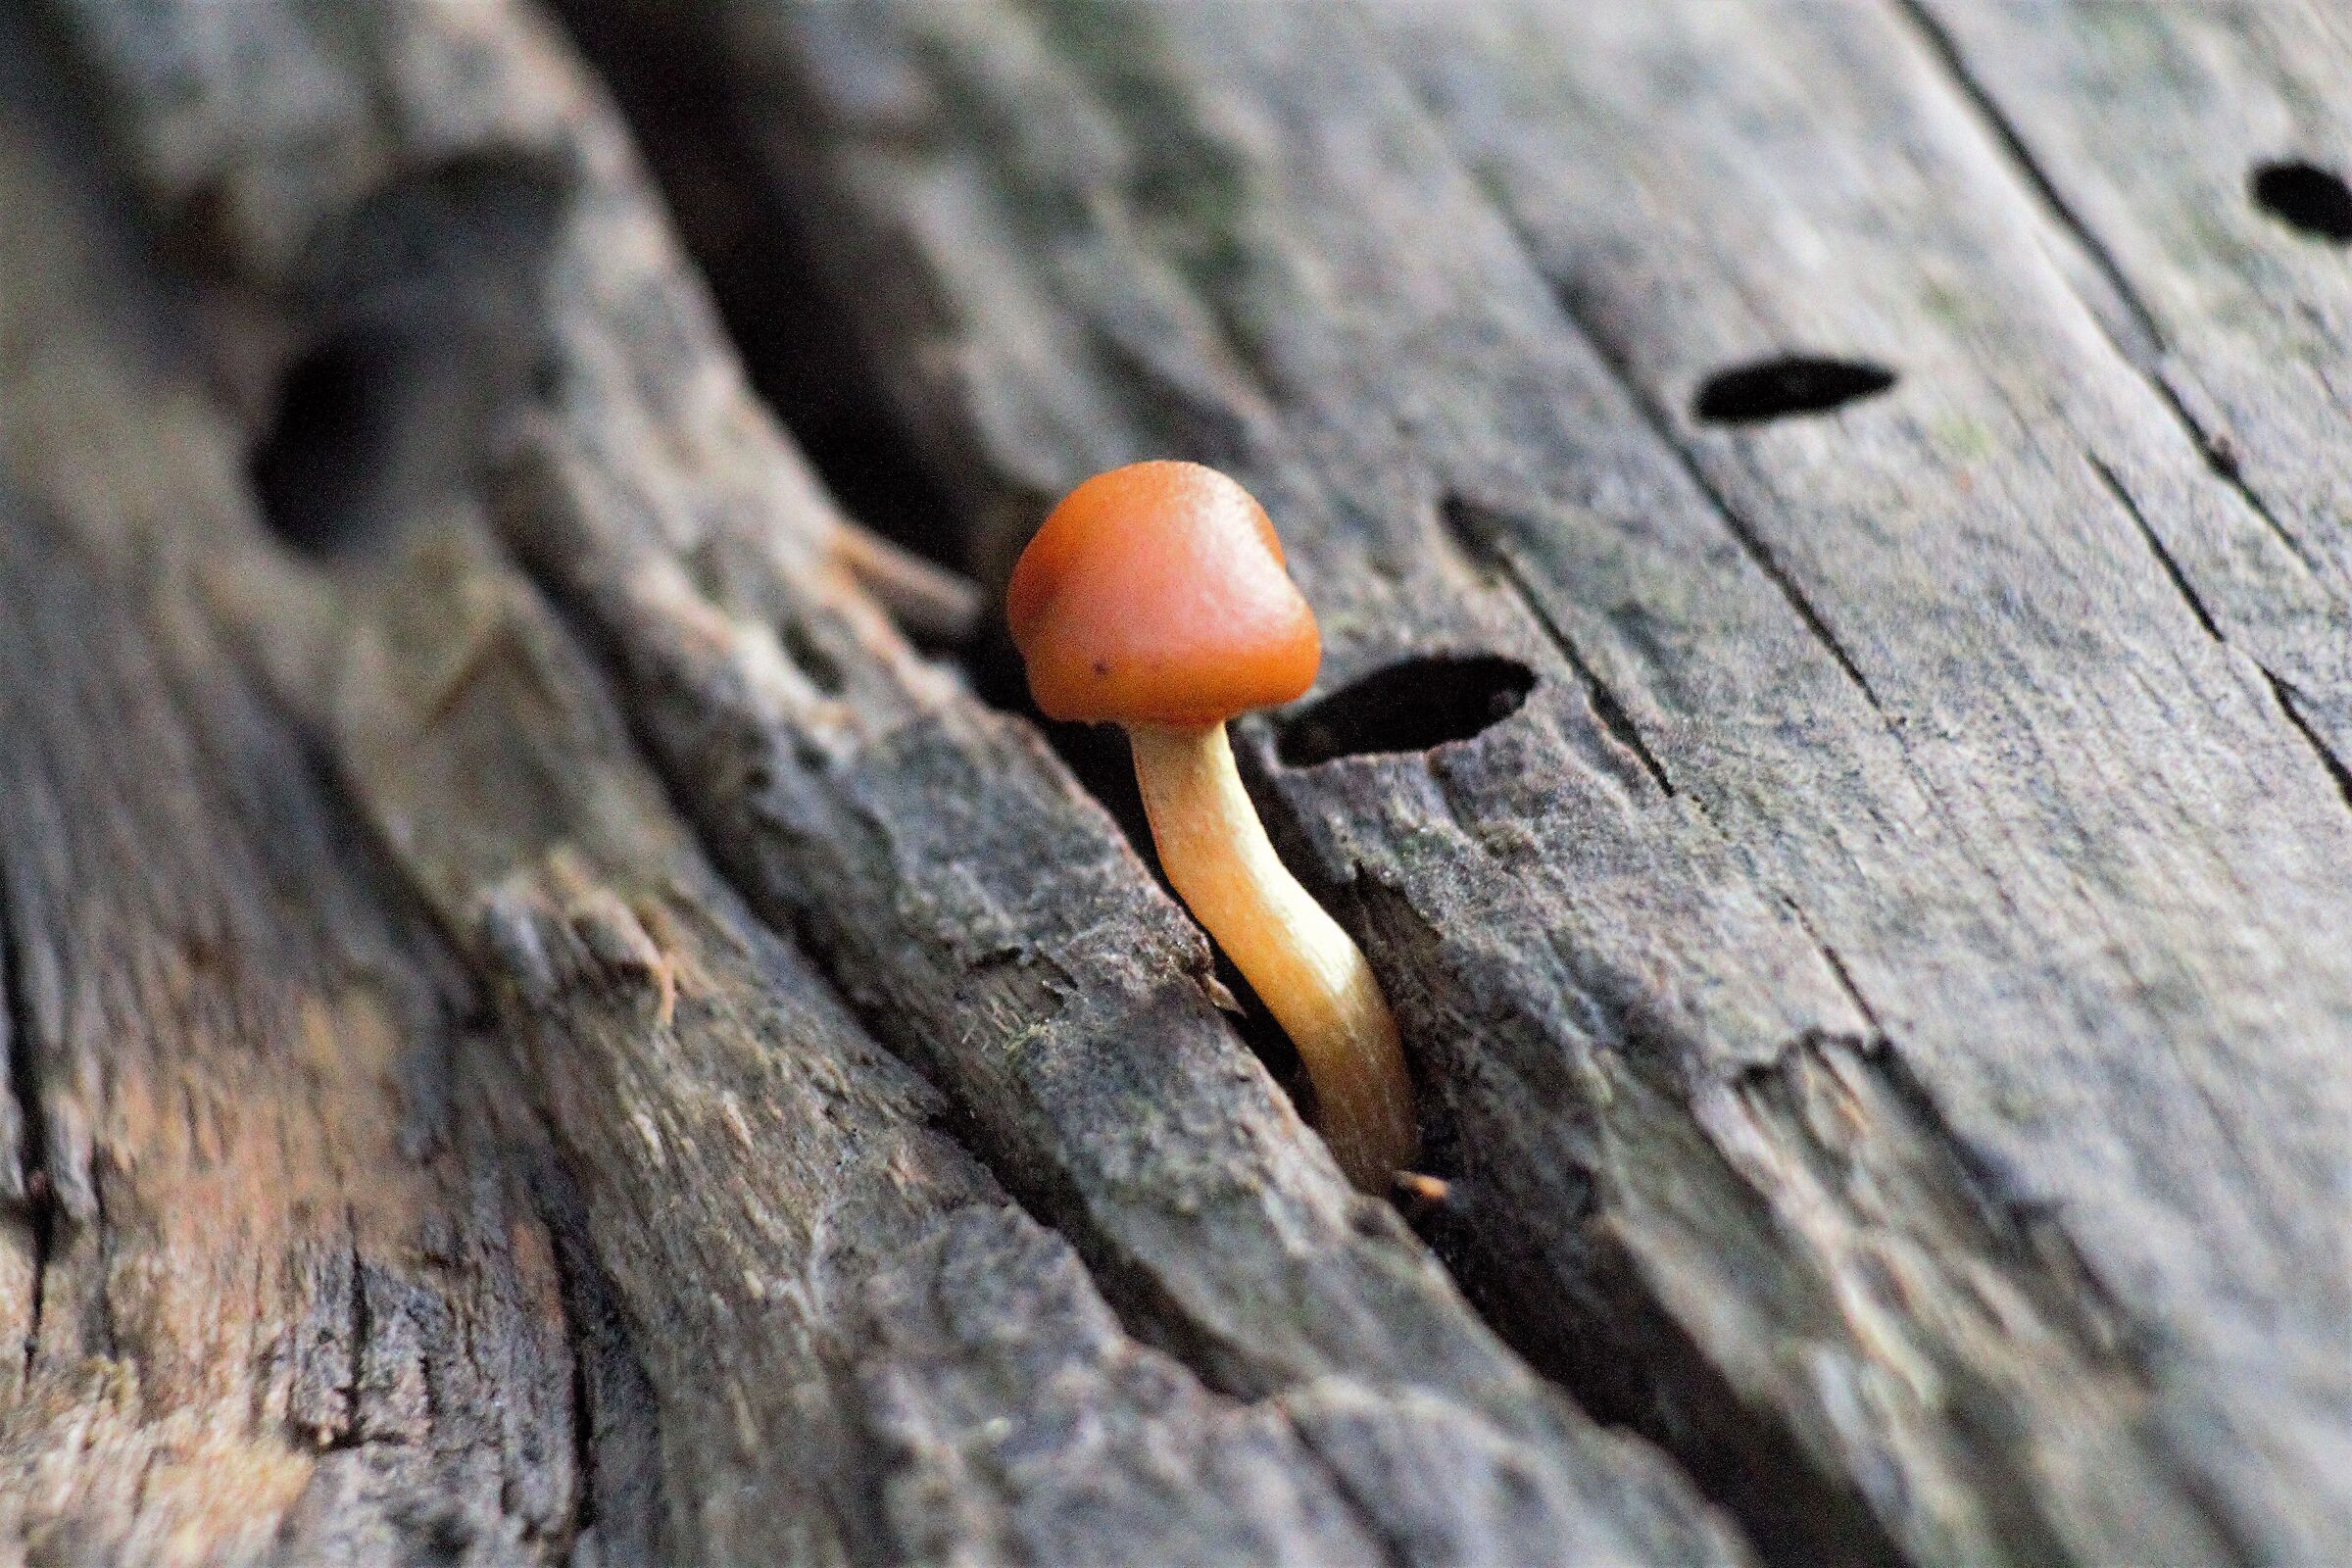 very small mushroom...